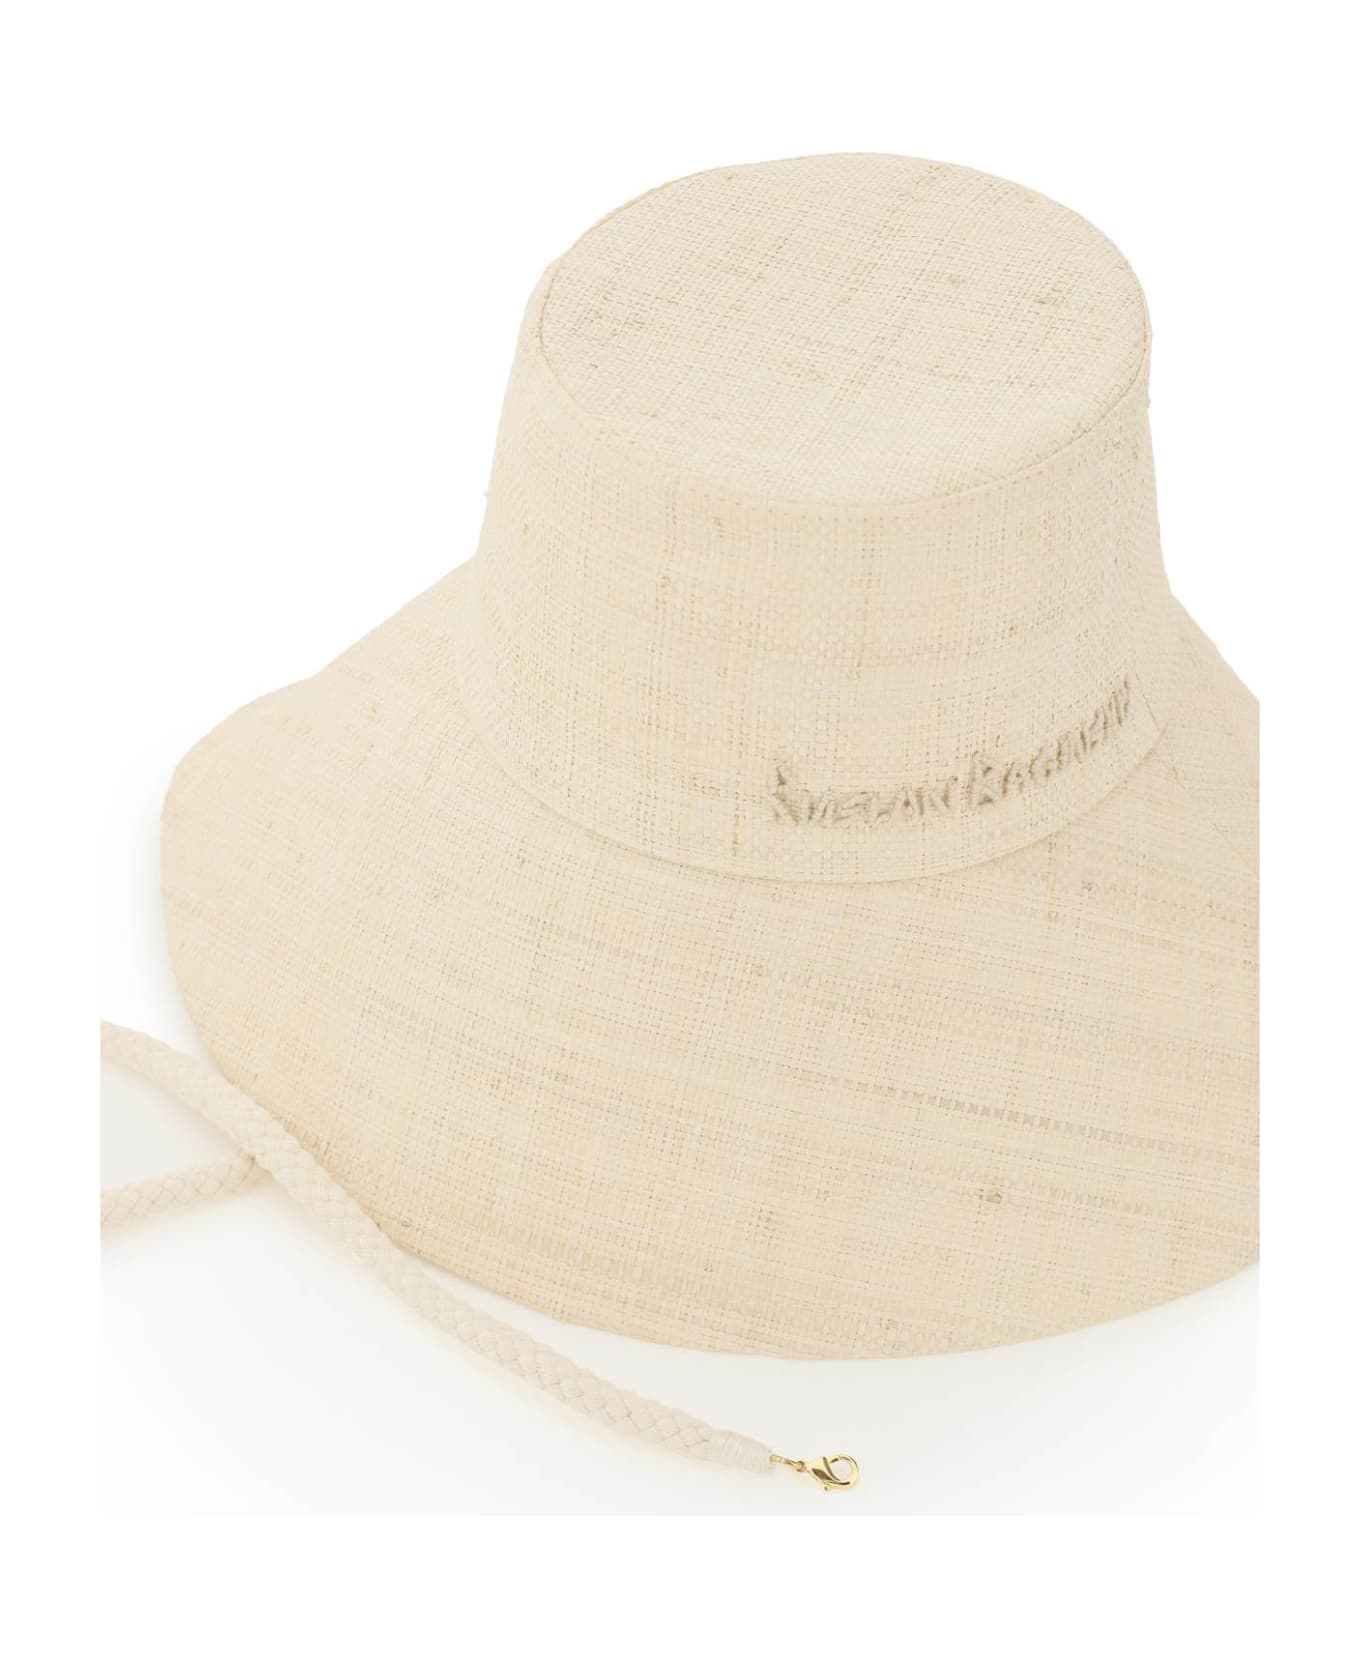 Ruslan Baginskiy Straw Wide Brim Bucket Hat - NATURAL STRAW (Beige) 帽子